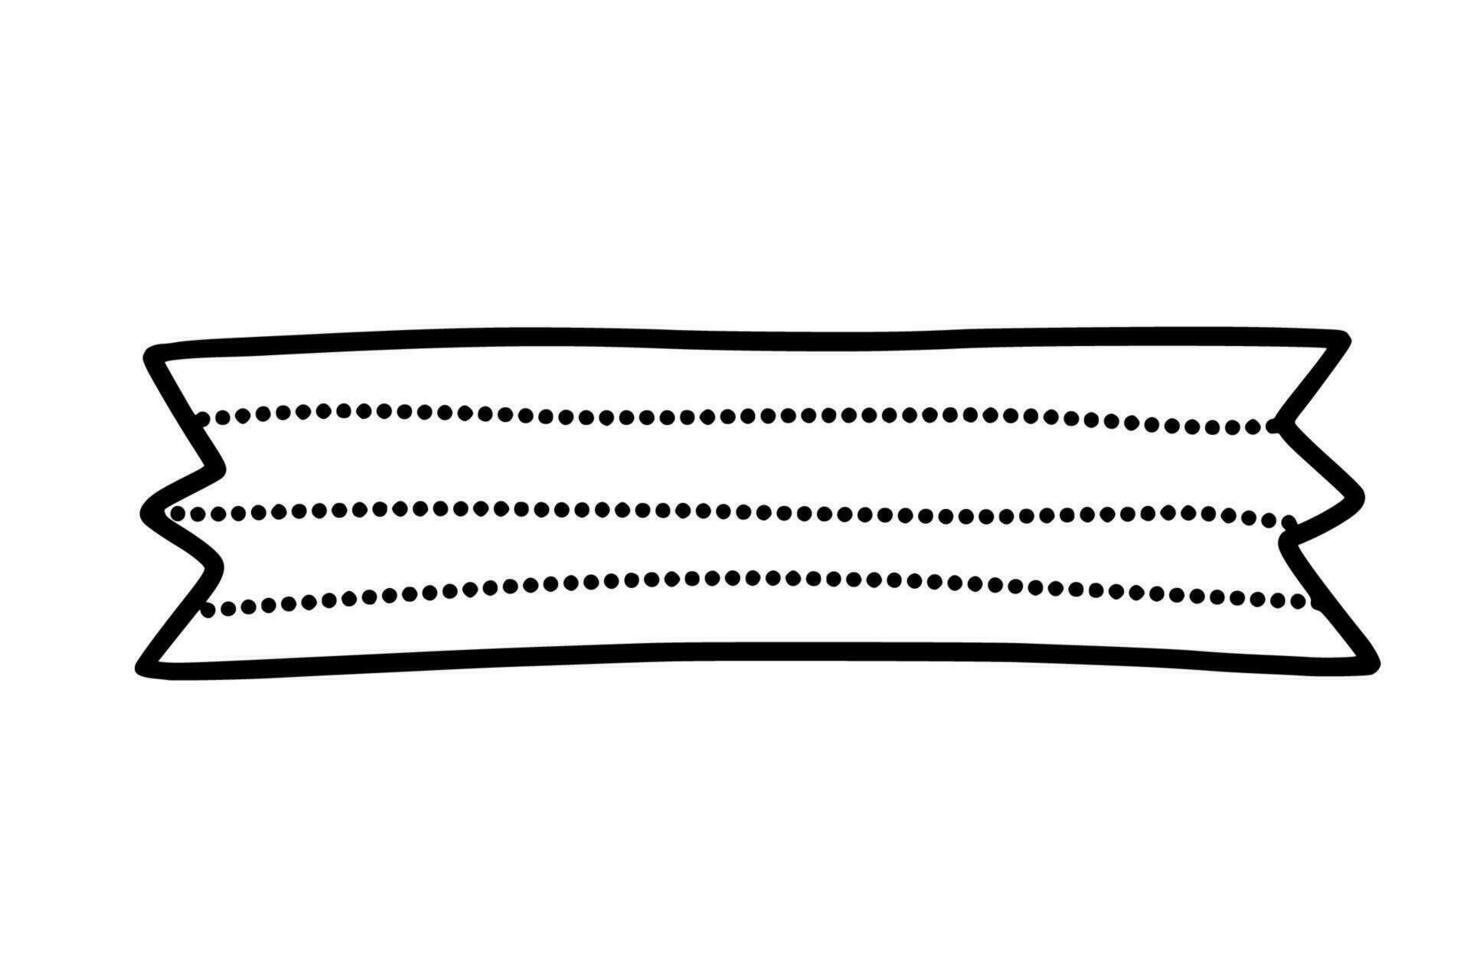 washi tape doodle illustration vector